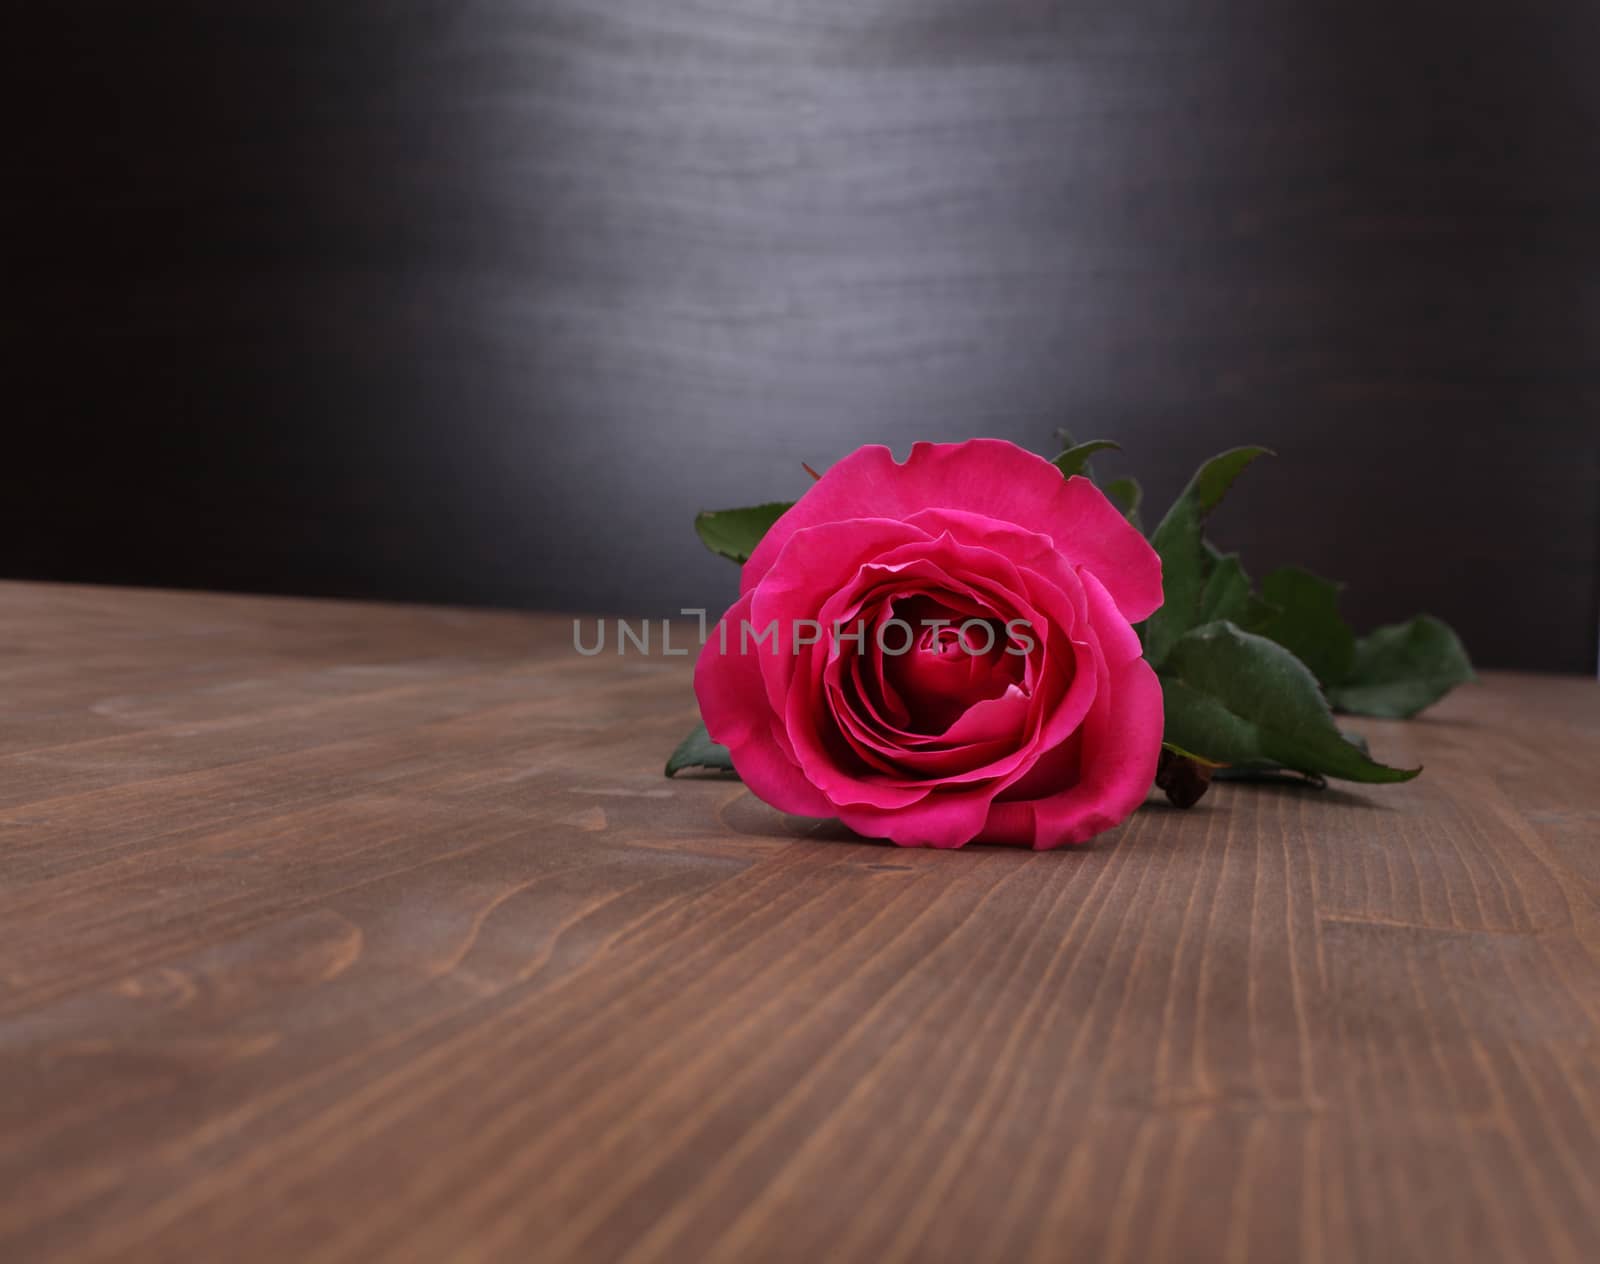 rose on wood background by rudchenko